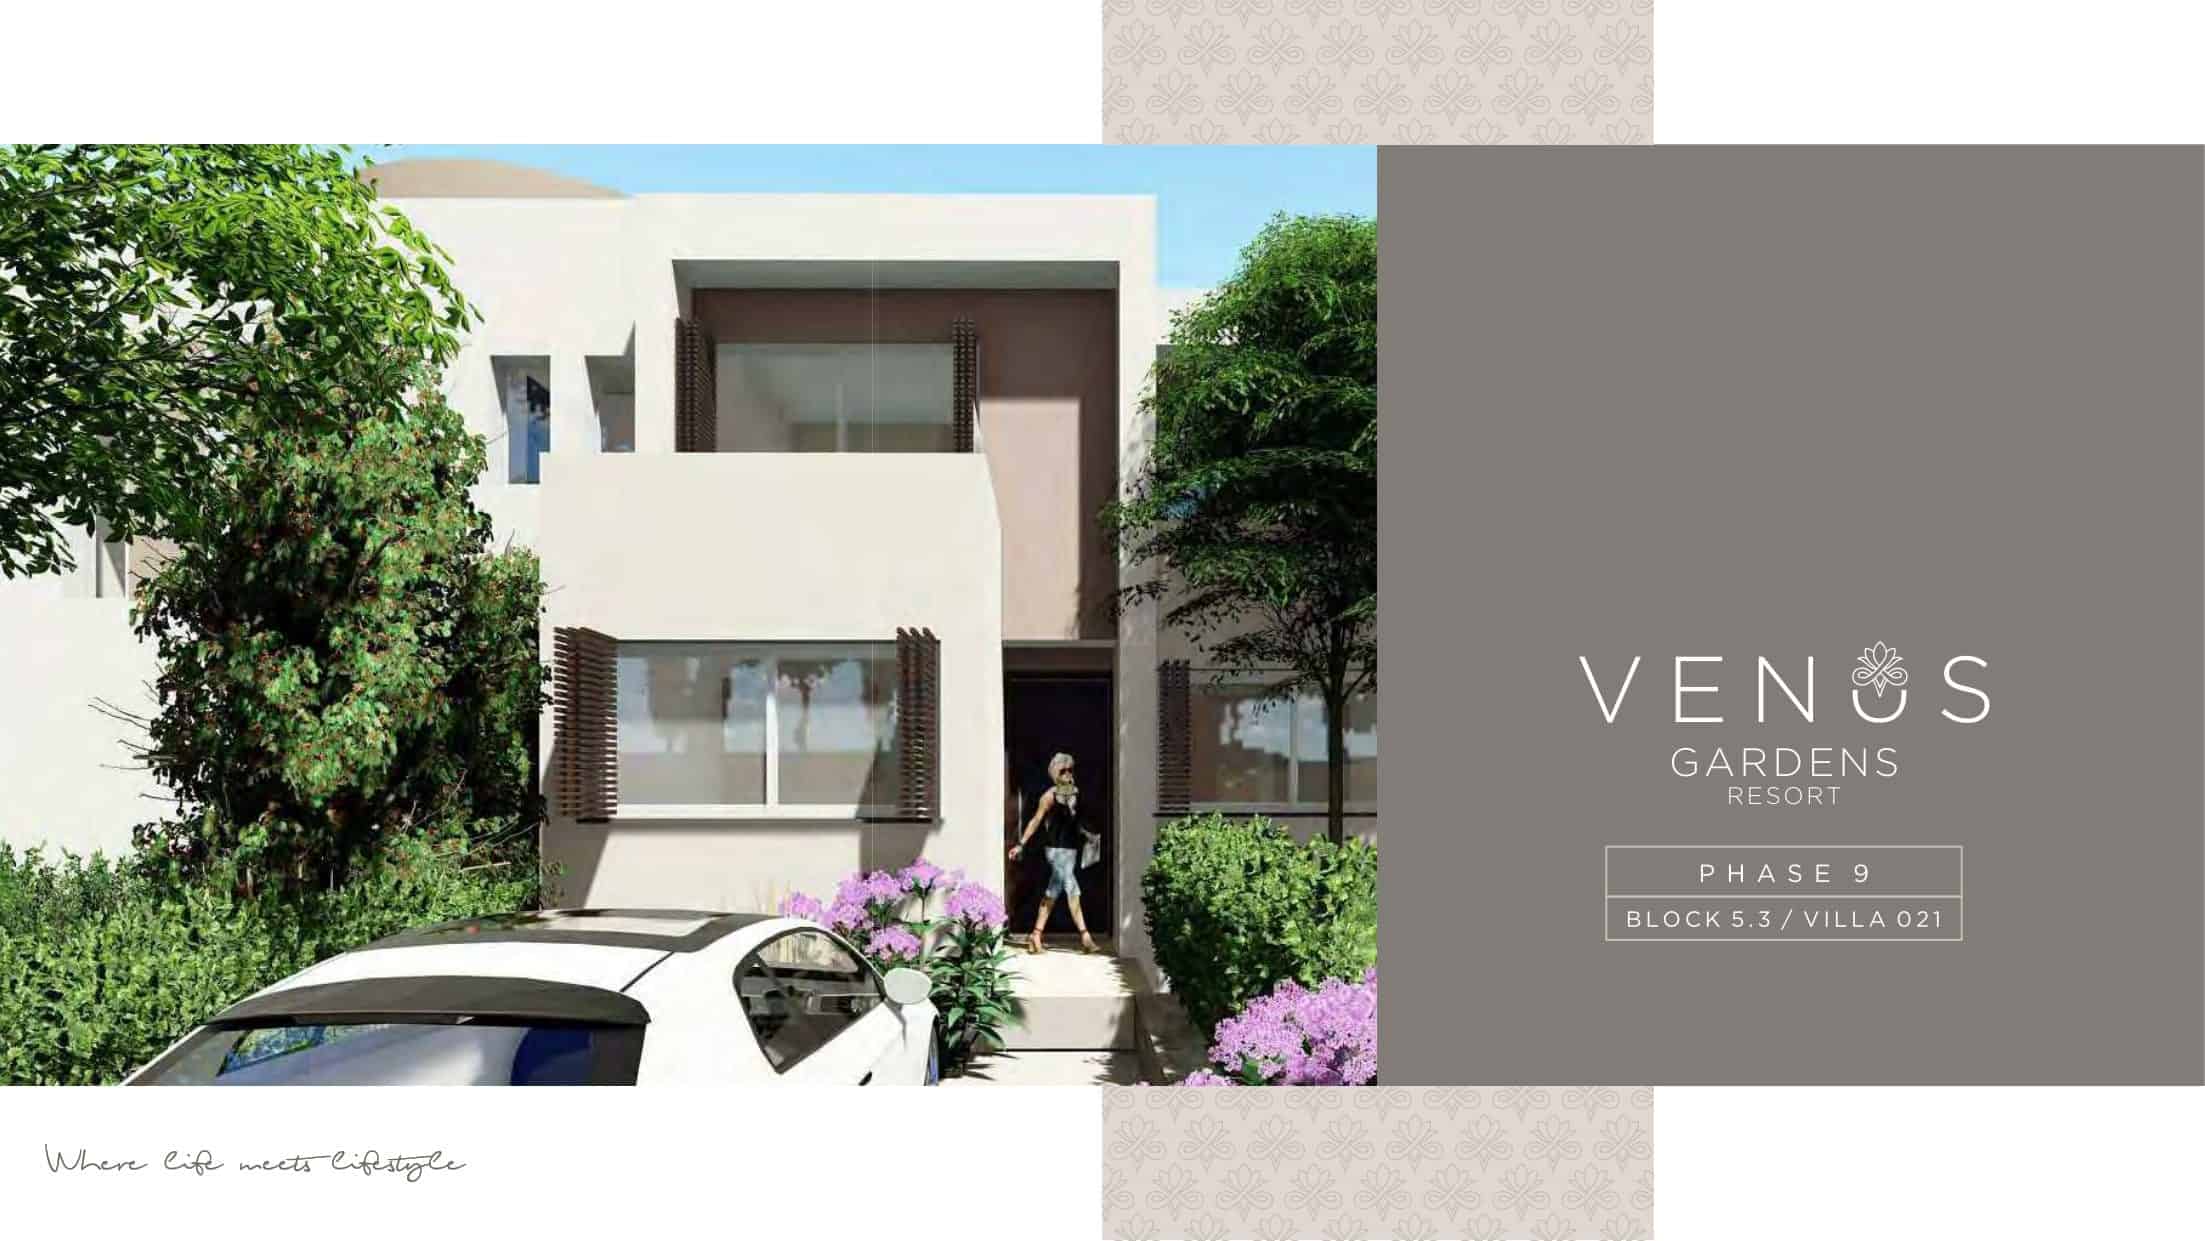 Villa 021 Venus Gardens Phase 9 block 5.3